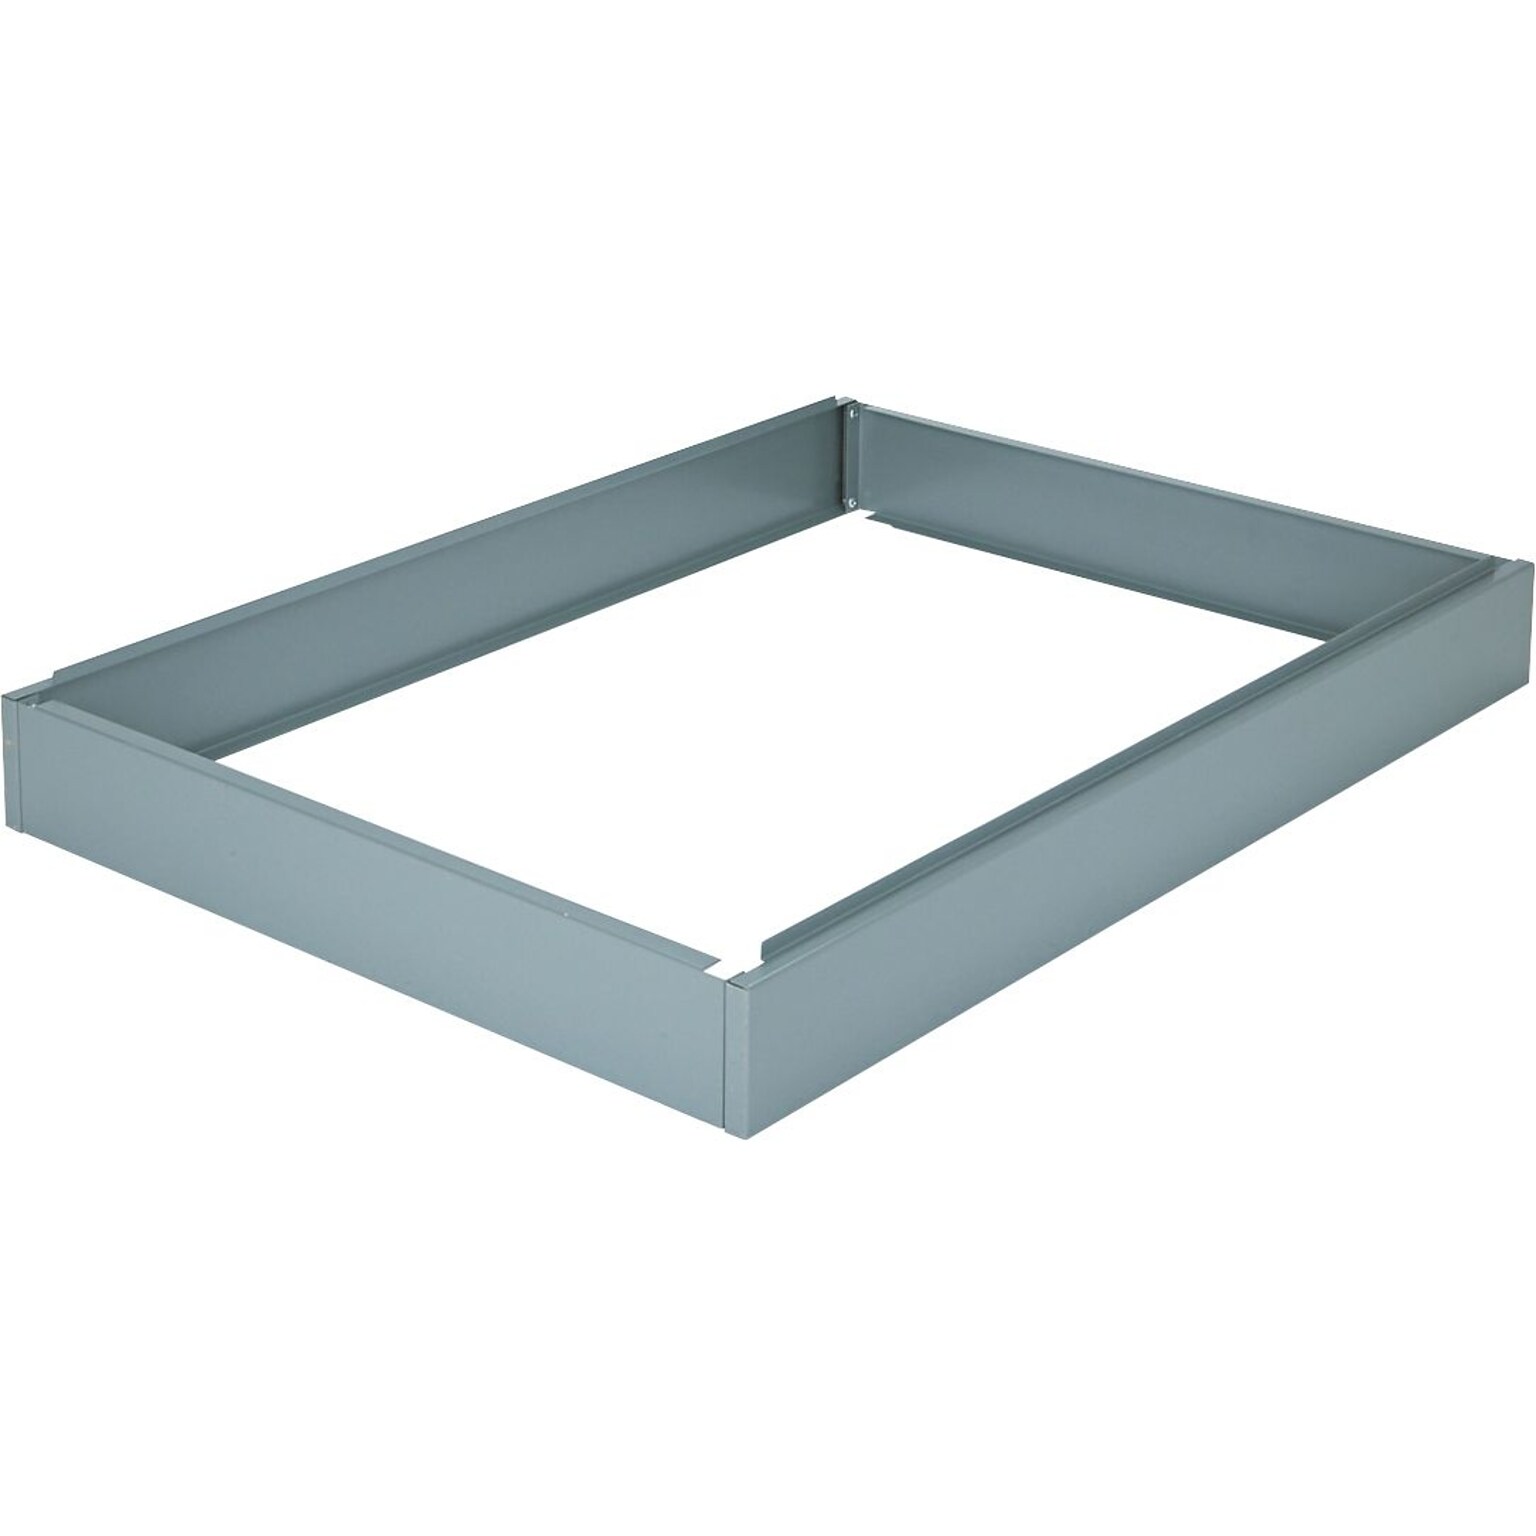 Safco Open-Drawer Flat File Cabinet Base, Gray (4999GRR)